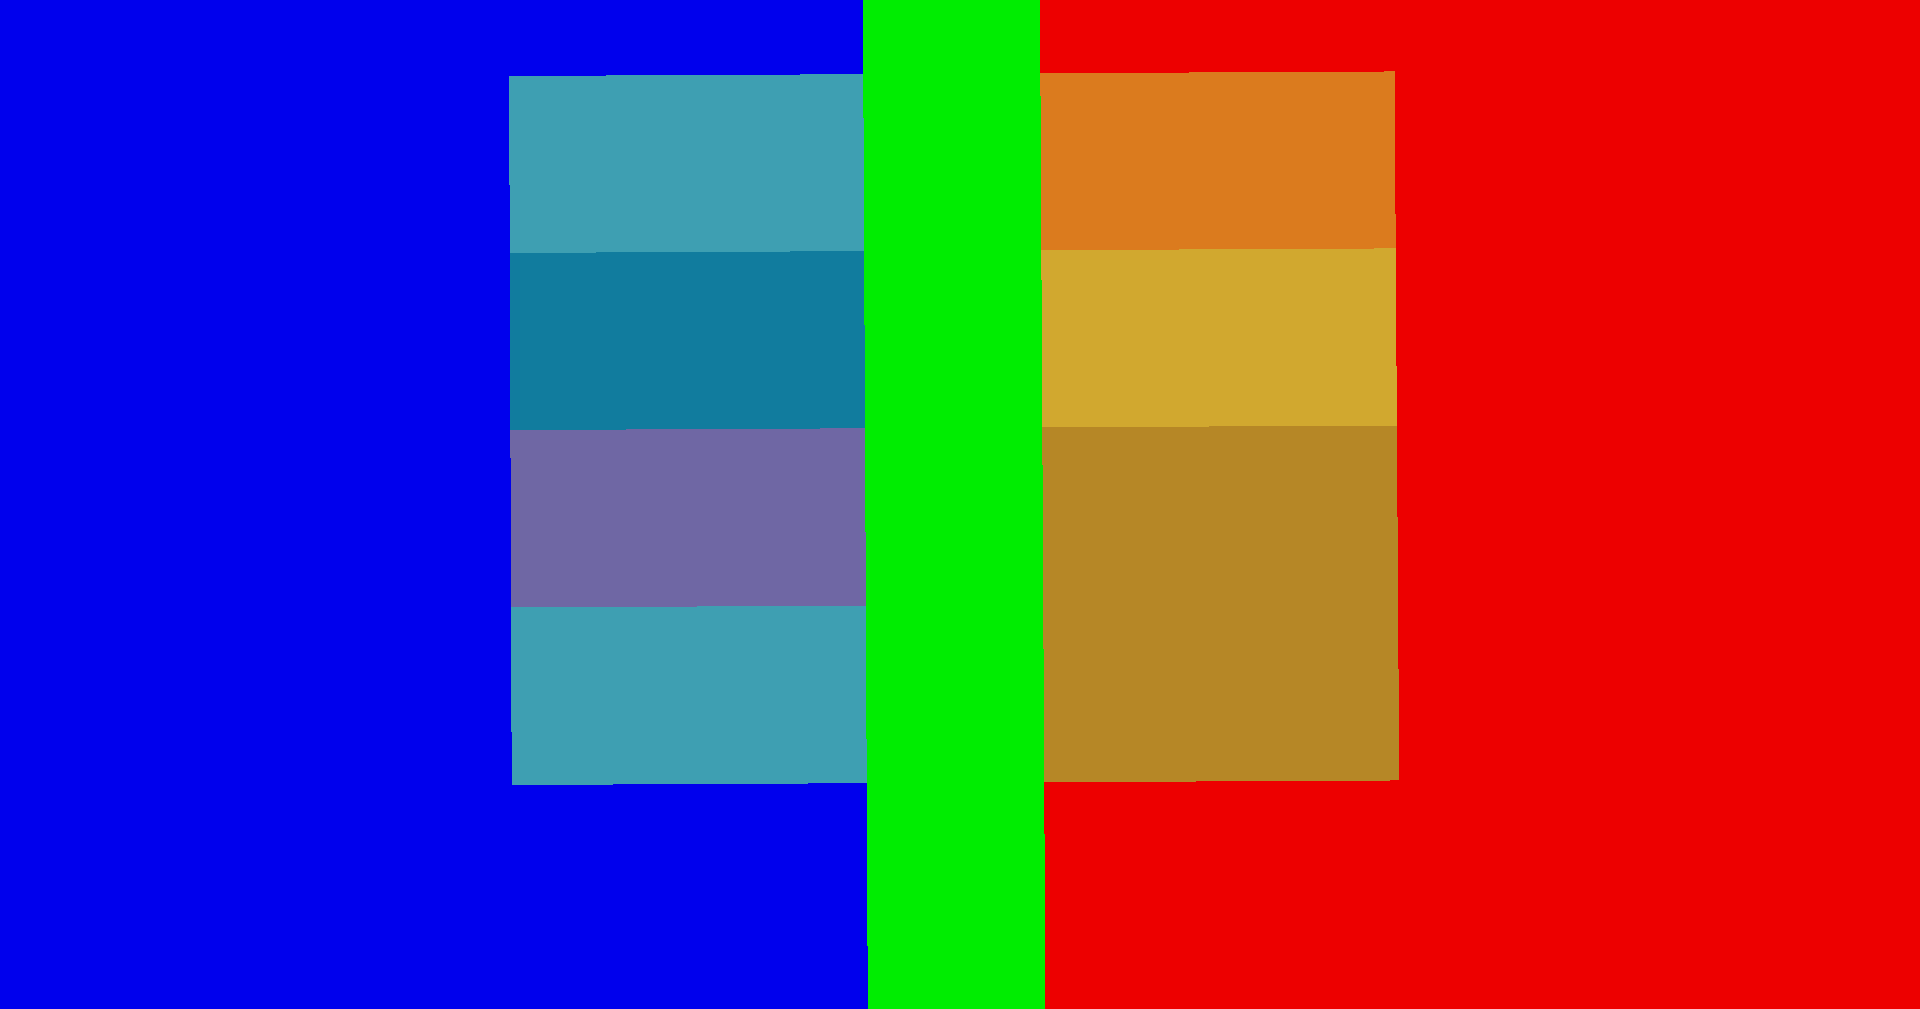 Colored Hex Blocks